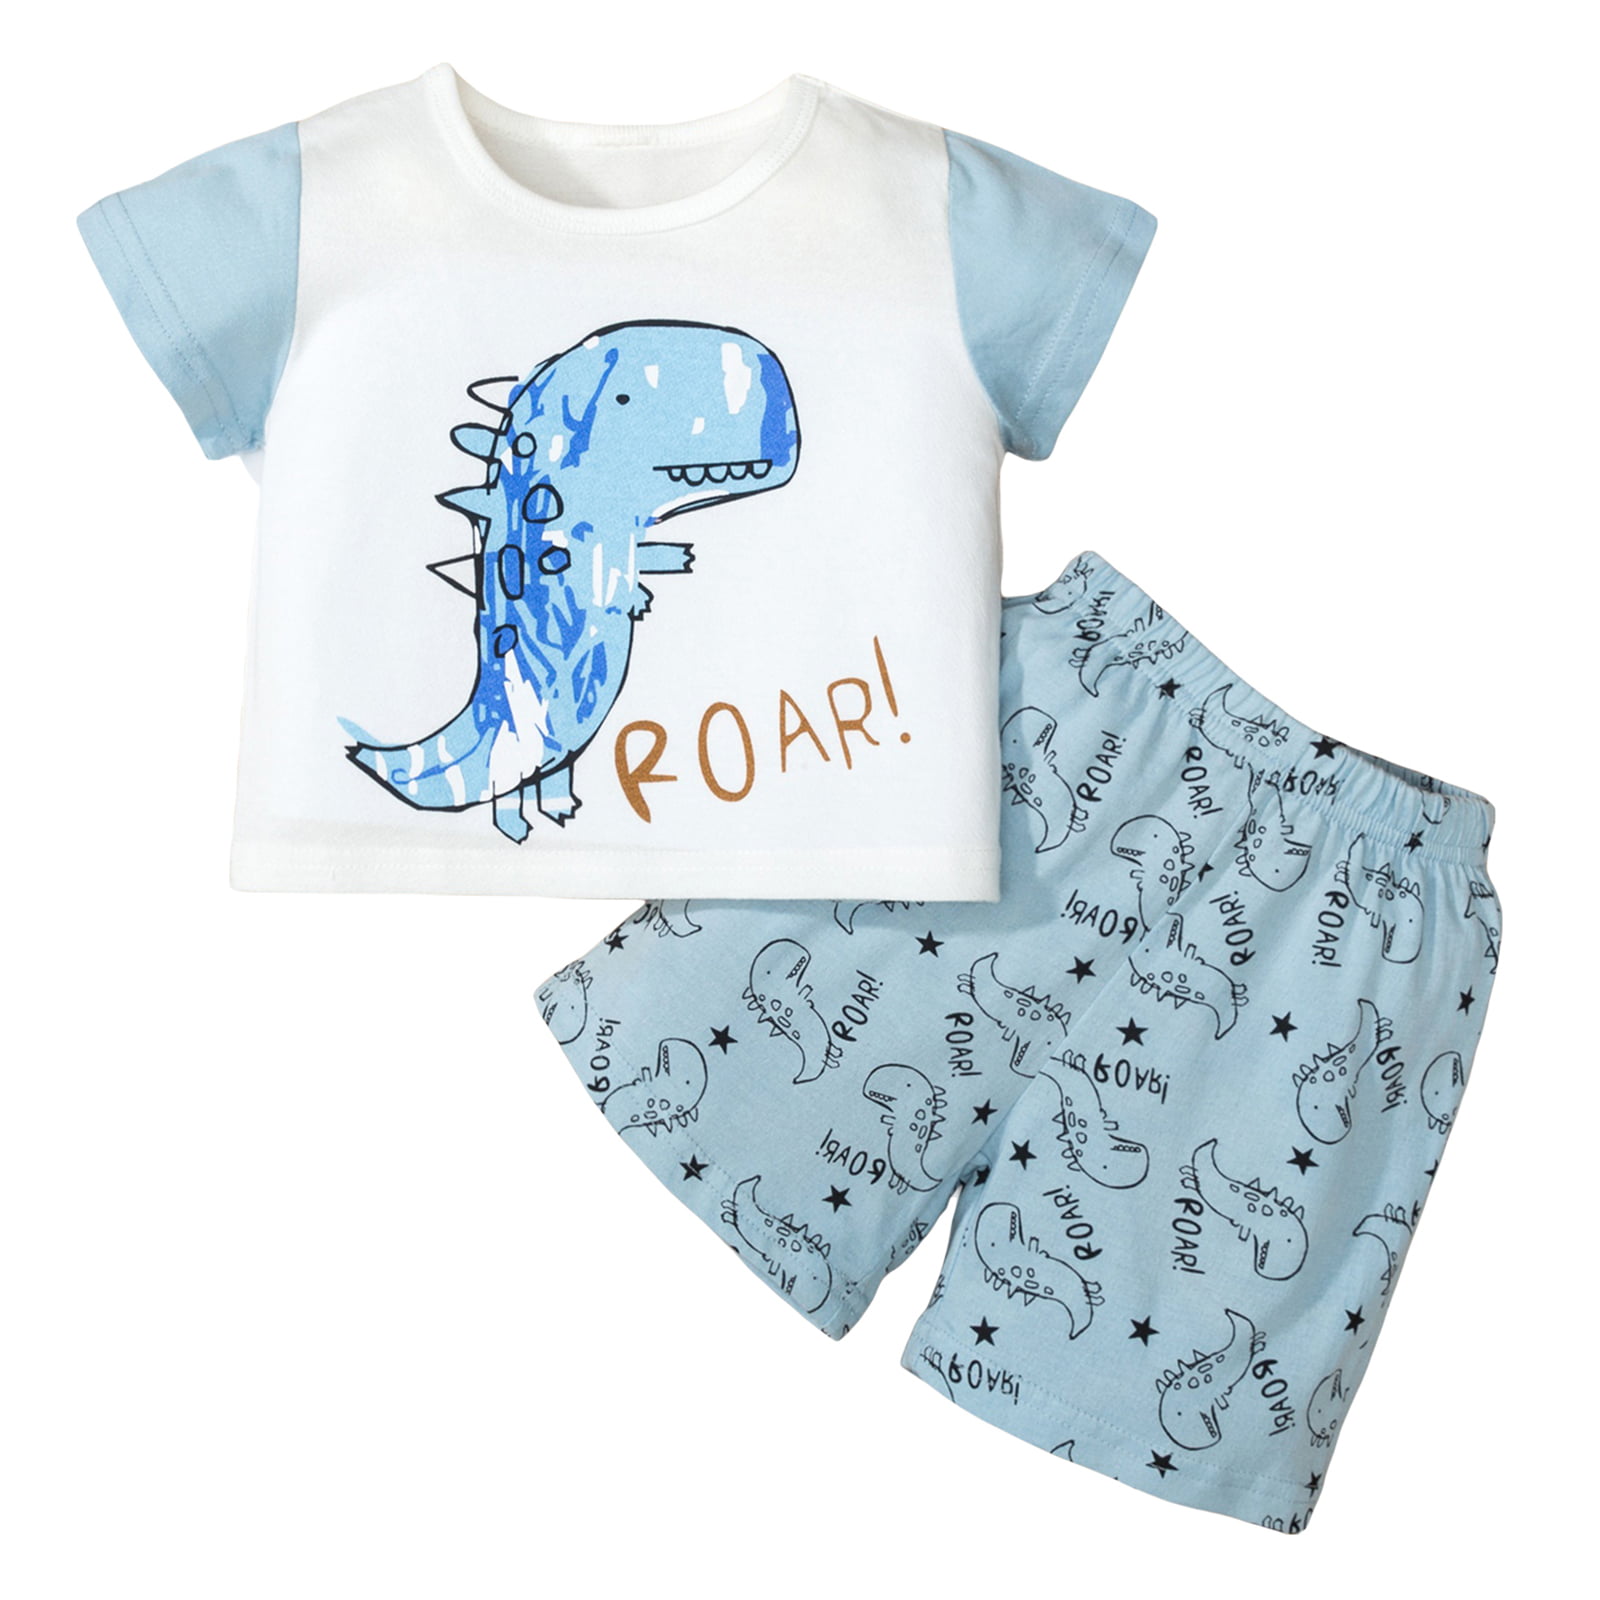 Mothercare Boys 2 Piece Check Shirt Dinosaur T-Shirt Top Set Baby Toddler Kids 